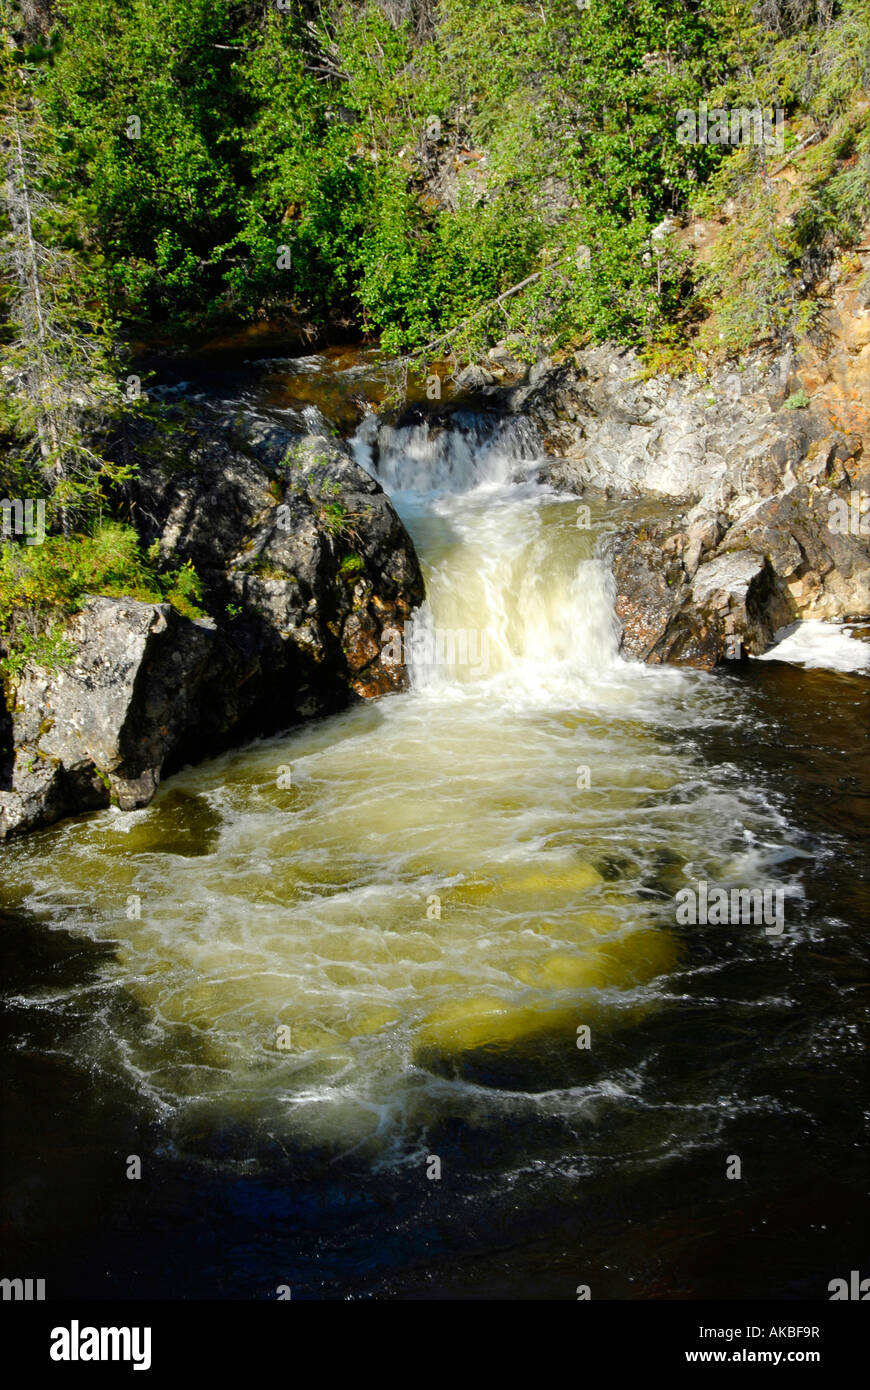 Rancheria Falls Recreation Site Along Alaska Highway ALCAN Al Can Yukon Territory Canada Stock Photo